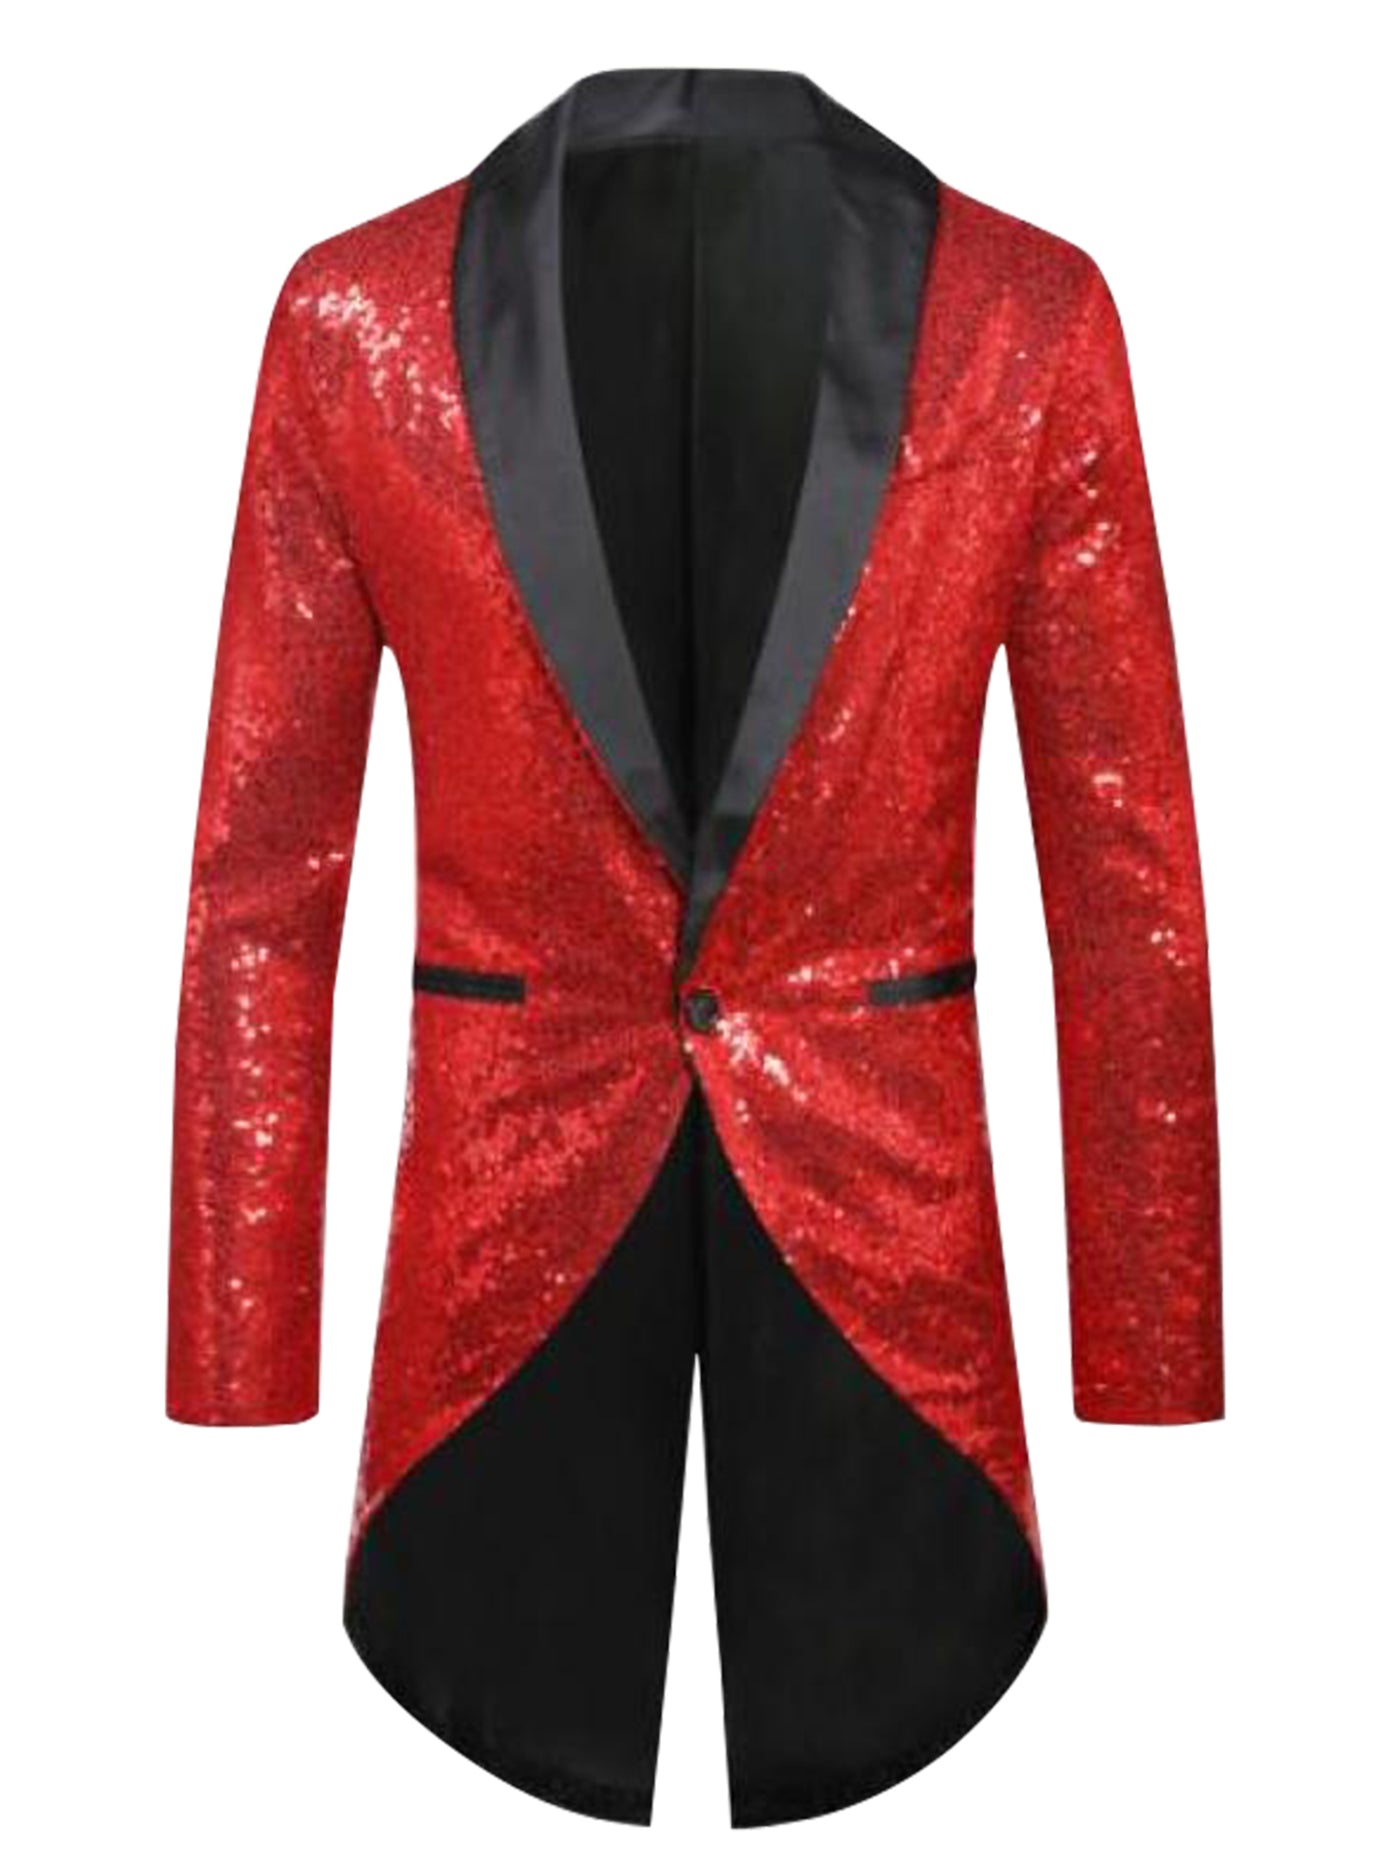 Bublédon Sequin Tuxedo for Men's Shawl Lapel Shiny Party Wedding Tailcoat